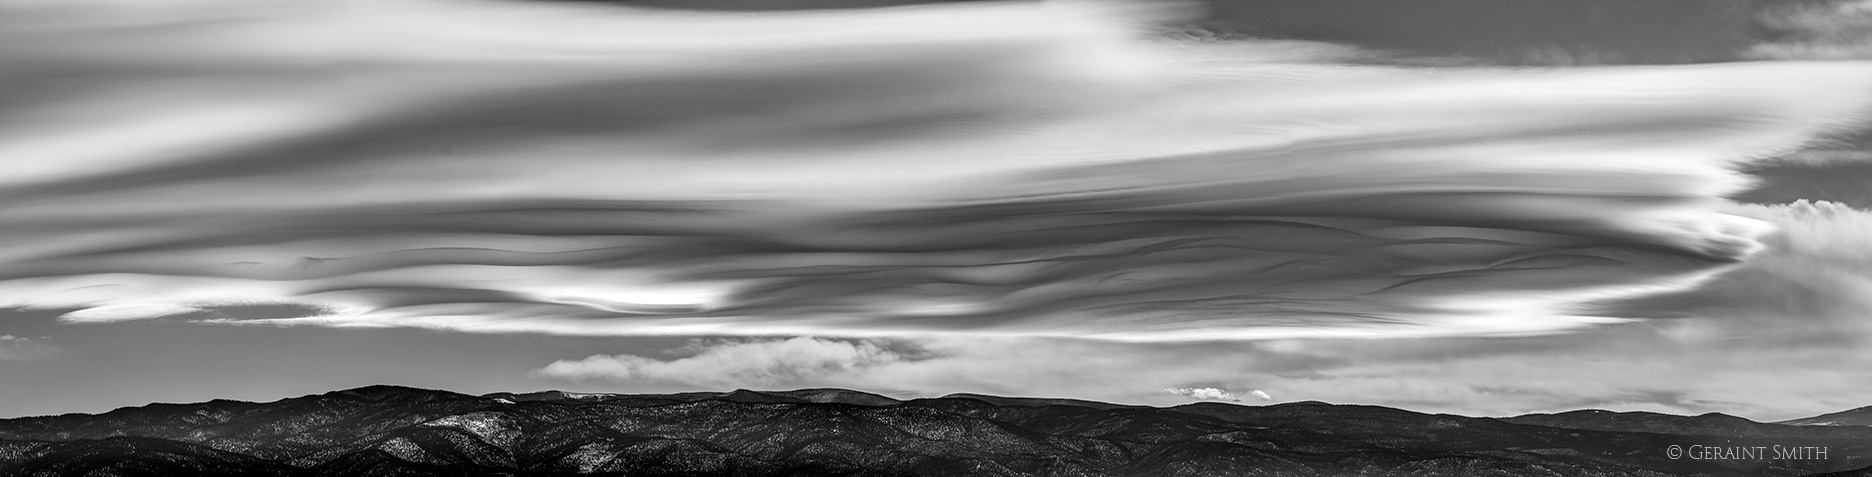 Large lenticular clouds, Taos, NM